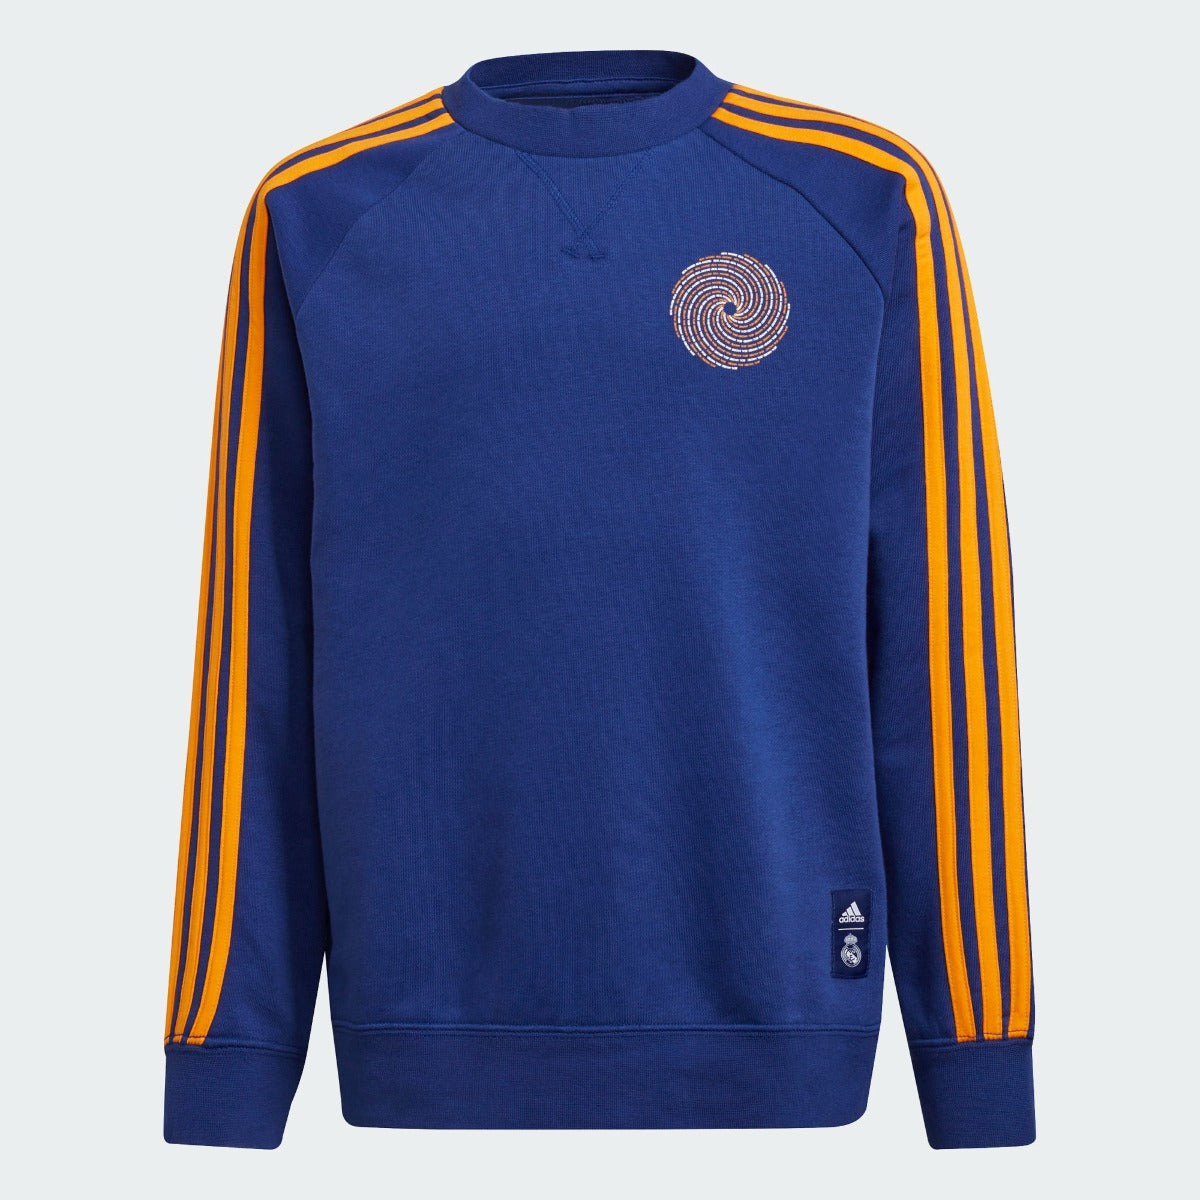 Adidas 2021-22 Real Madrid Youth Crew Sweatshirt - Navy-Orange (Front)